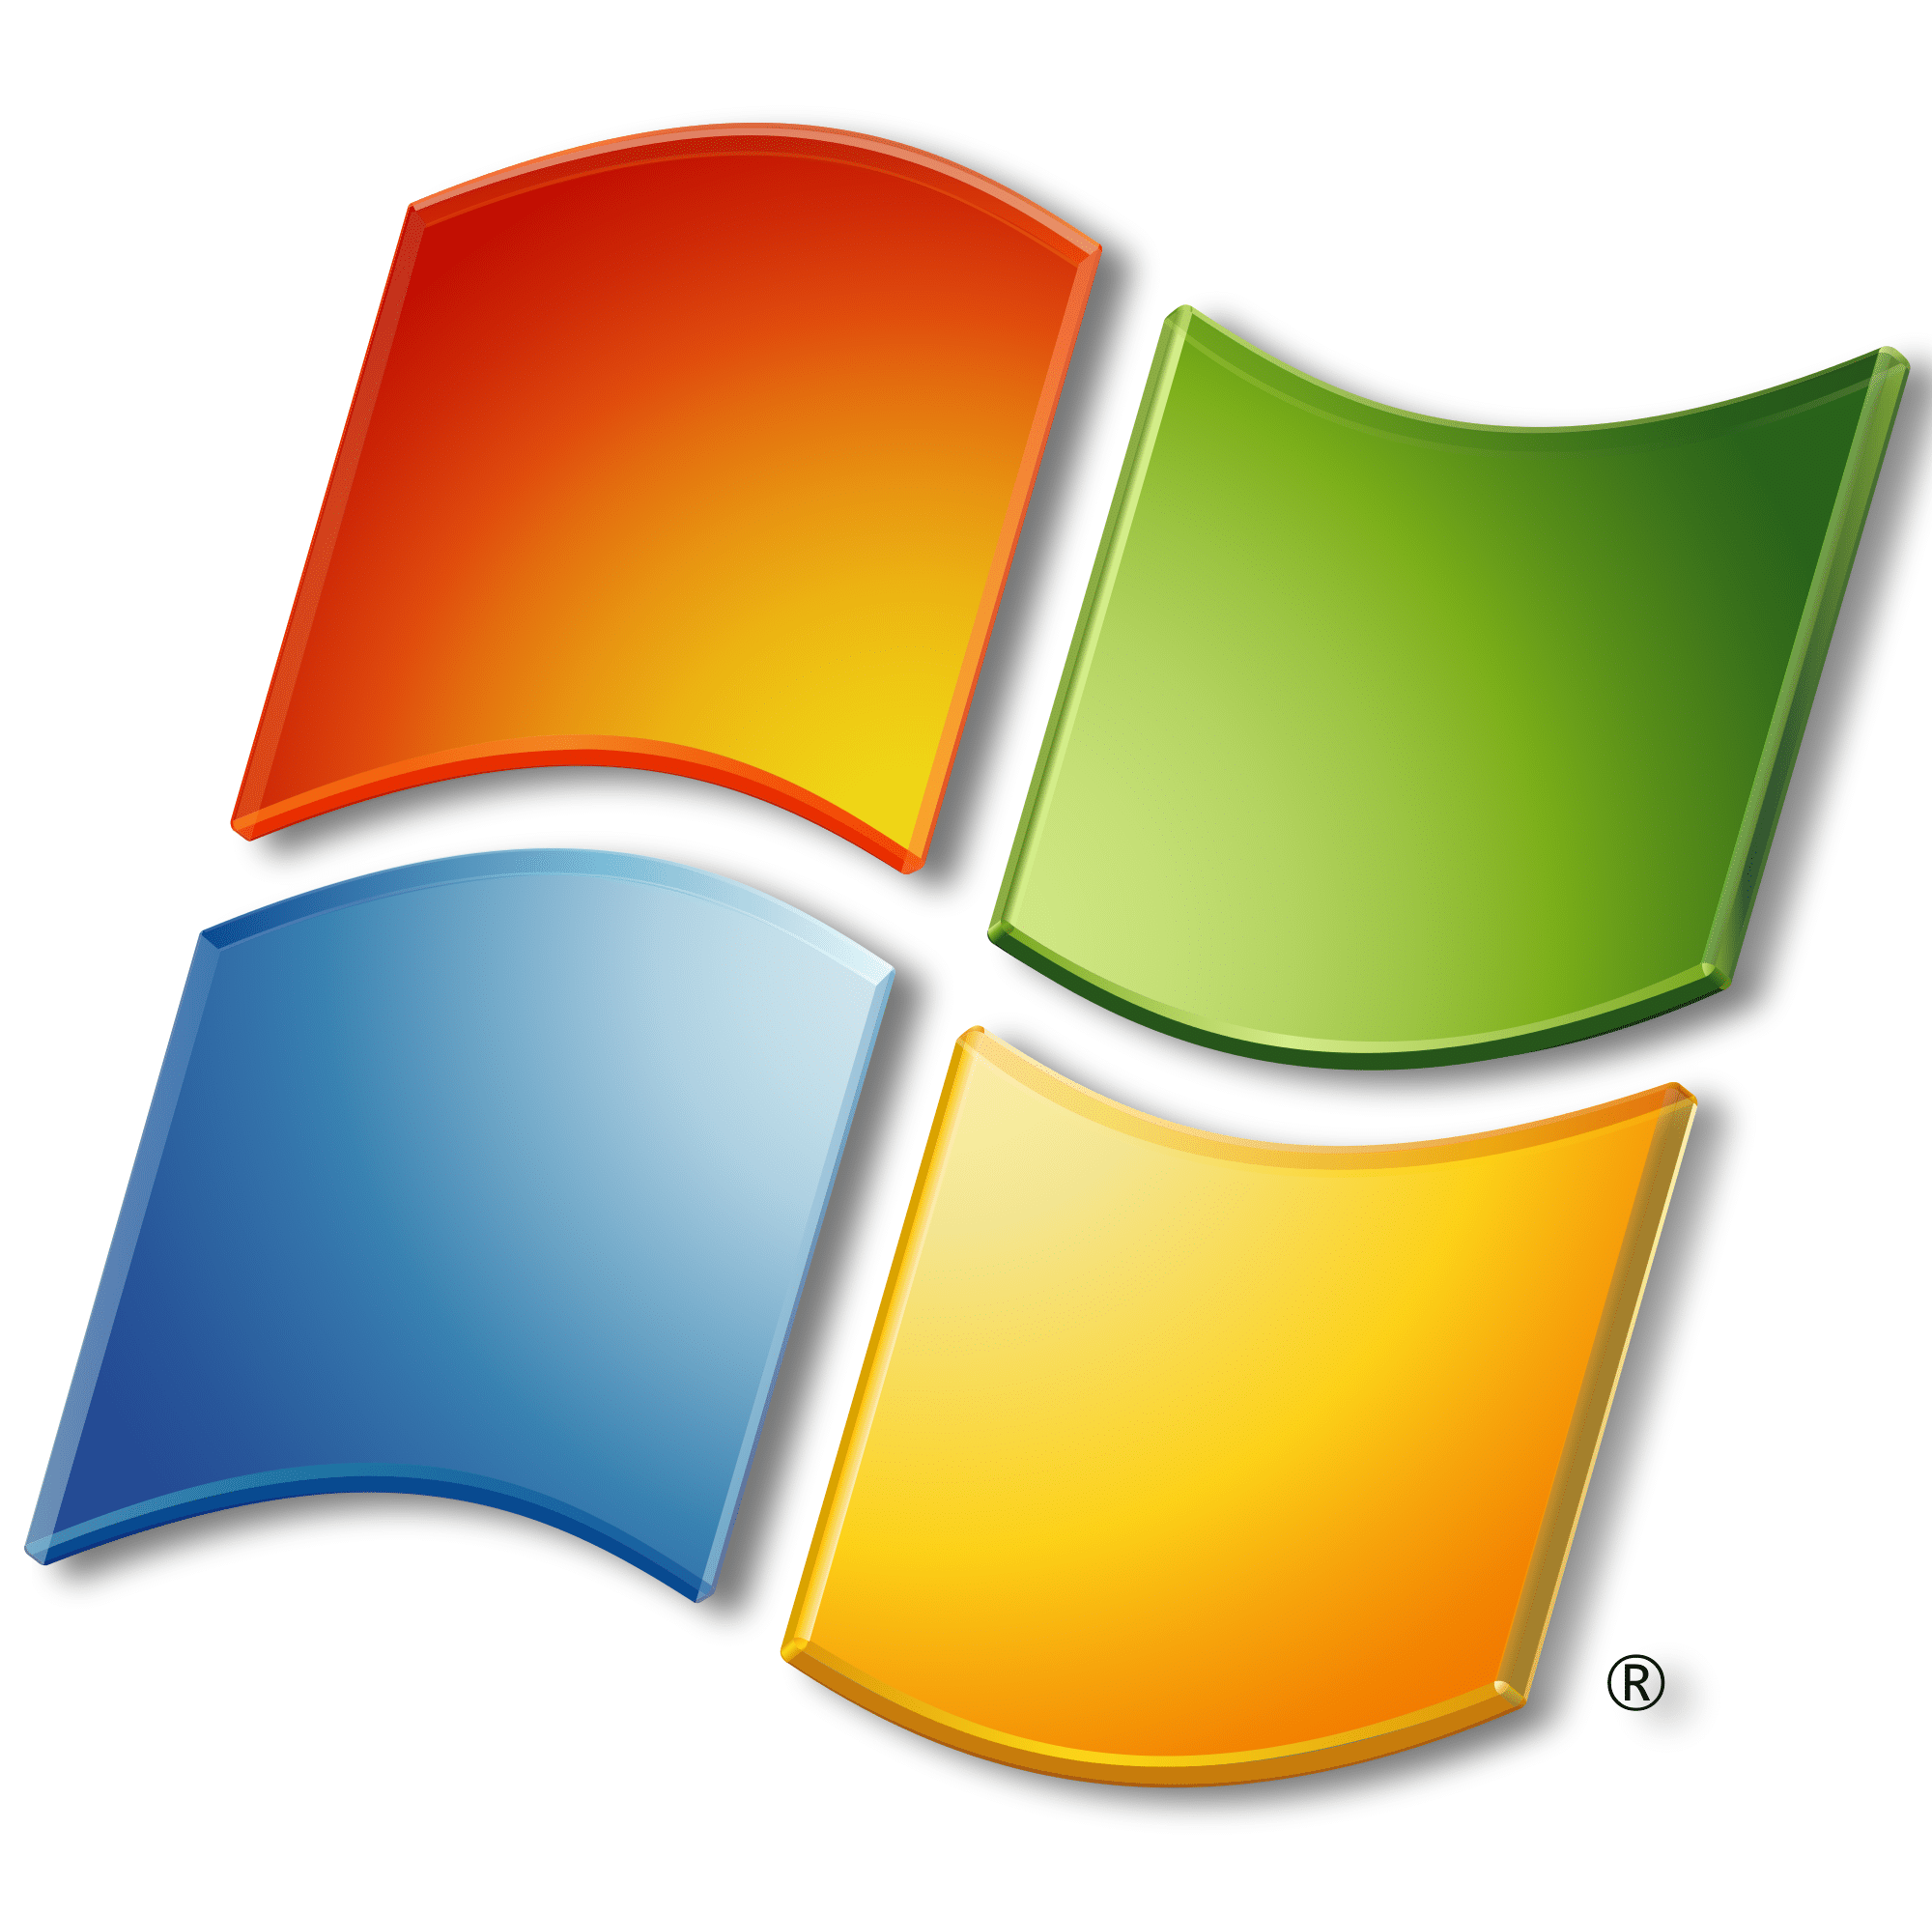 Windows 11 Windows Logo